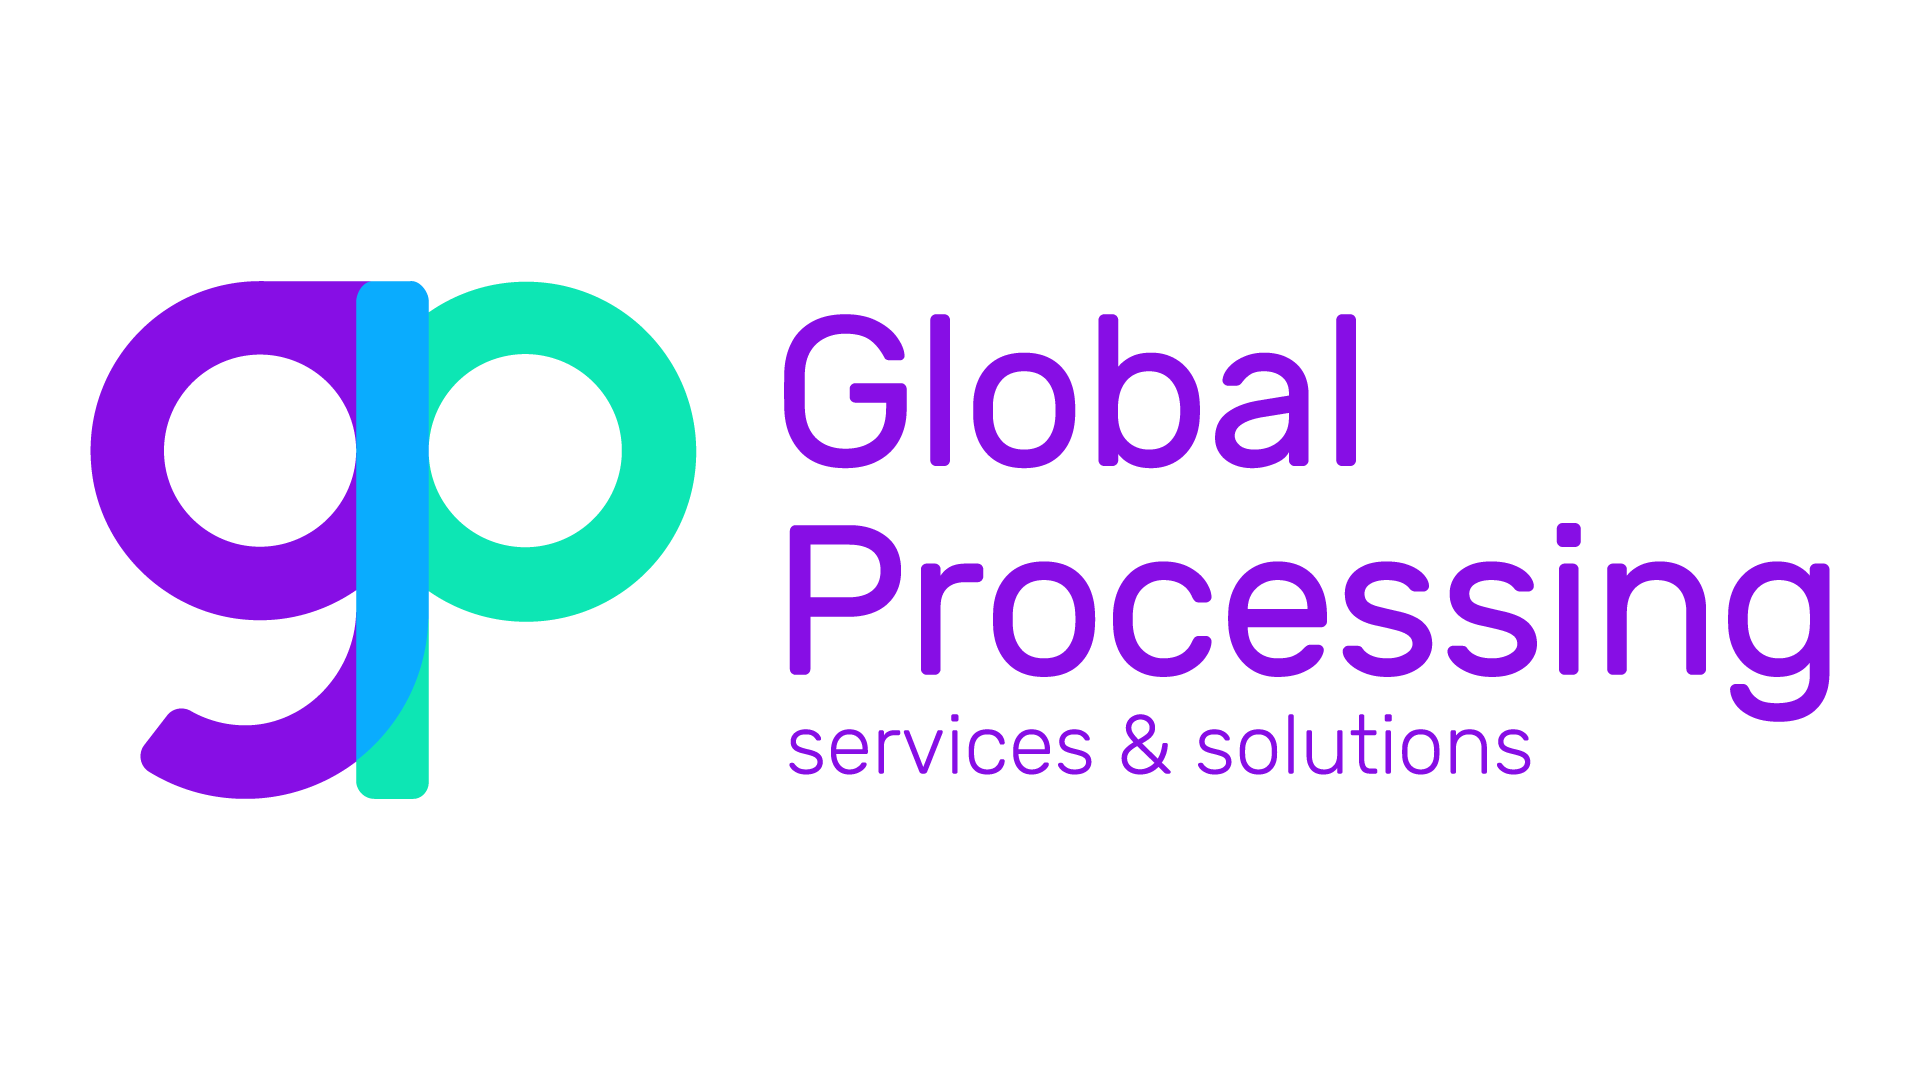 Global Processing partner logo